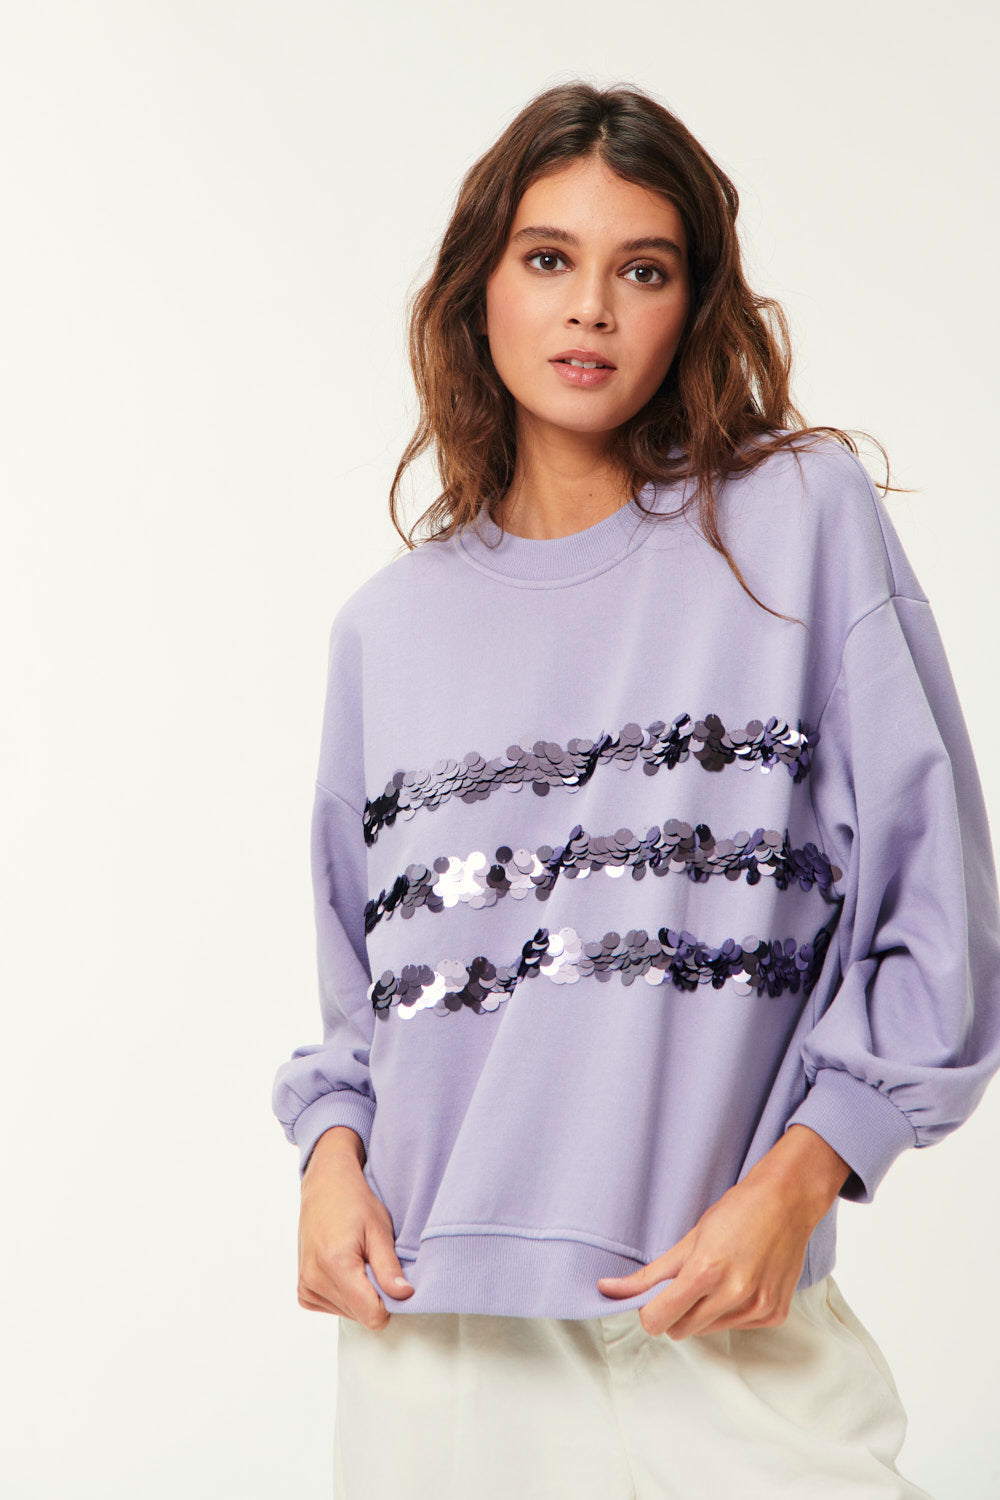 Kassy Mirage Sweatshirt